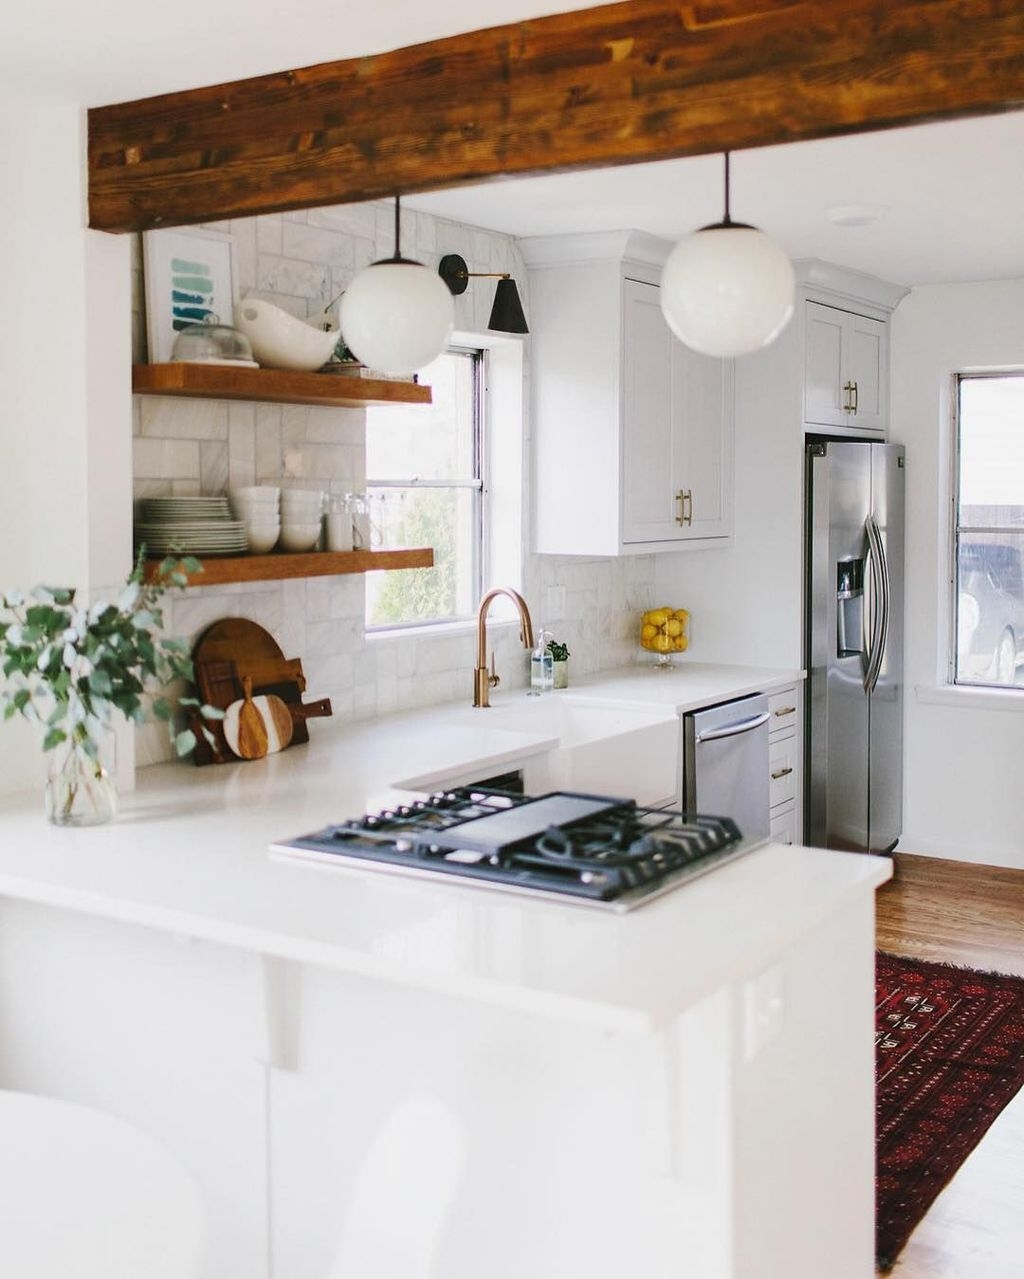 20+ Elegant Small White Kitchen Design Ideas